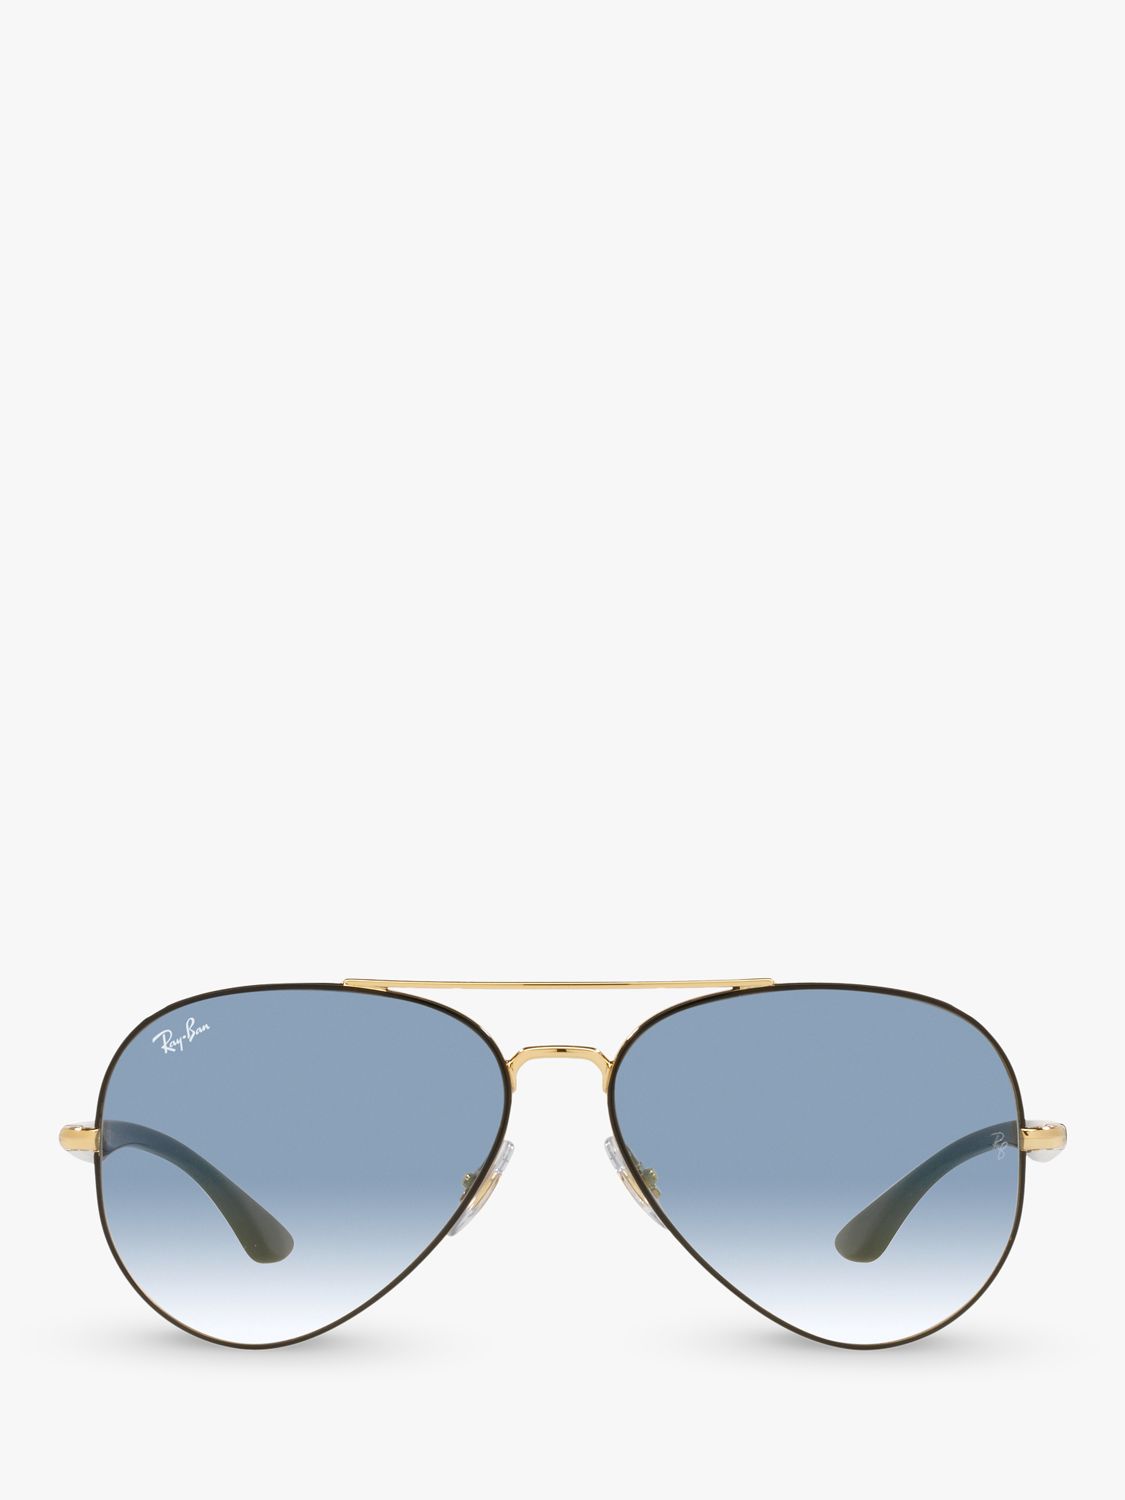 Ray-Ban RB3675 Unisex Aviator Sunglasses, Black Gold/Blue Gradient at ...